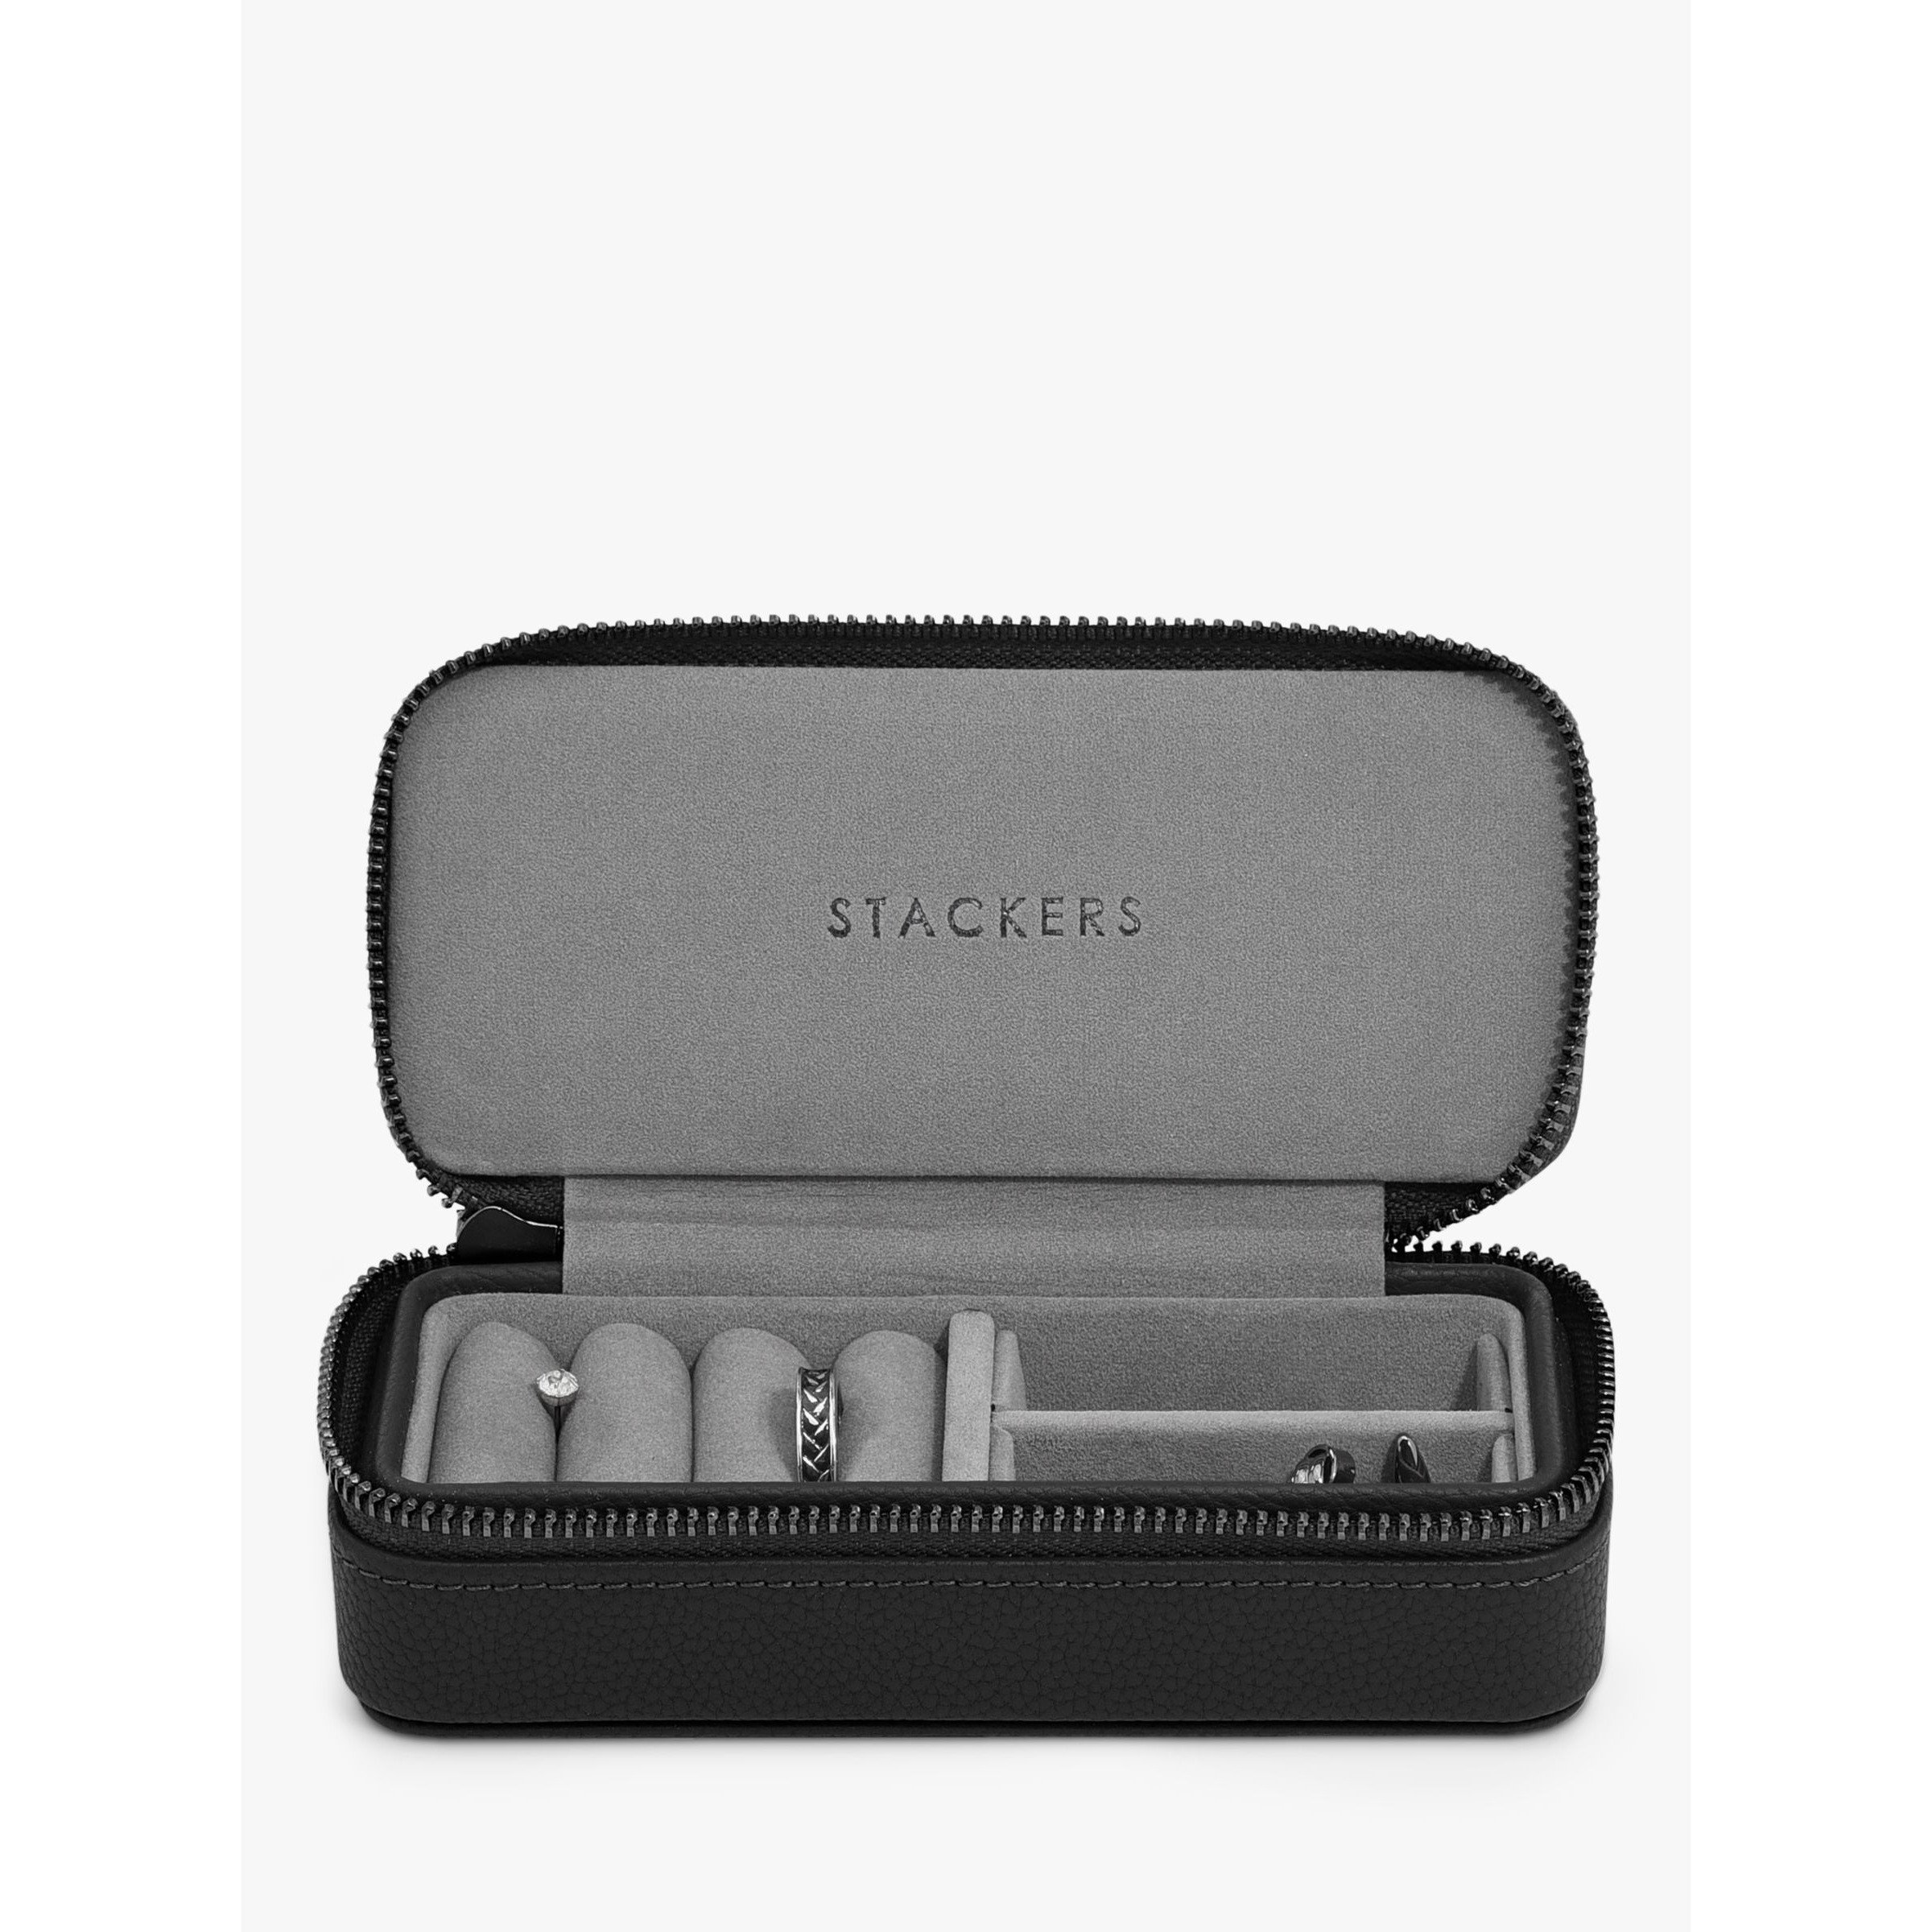 Stackers Travel Jewellery Box, Medium - image 1